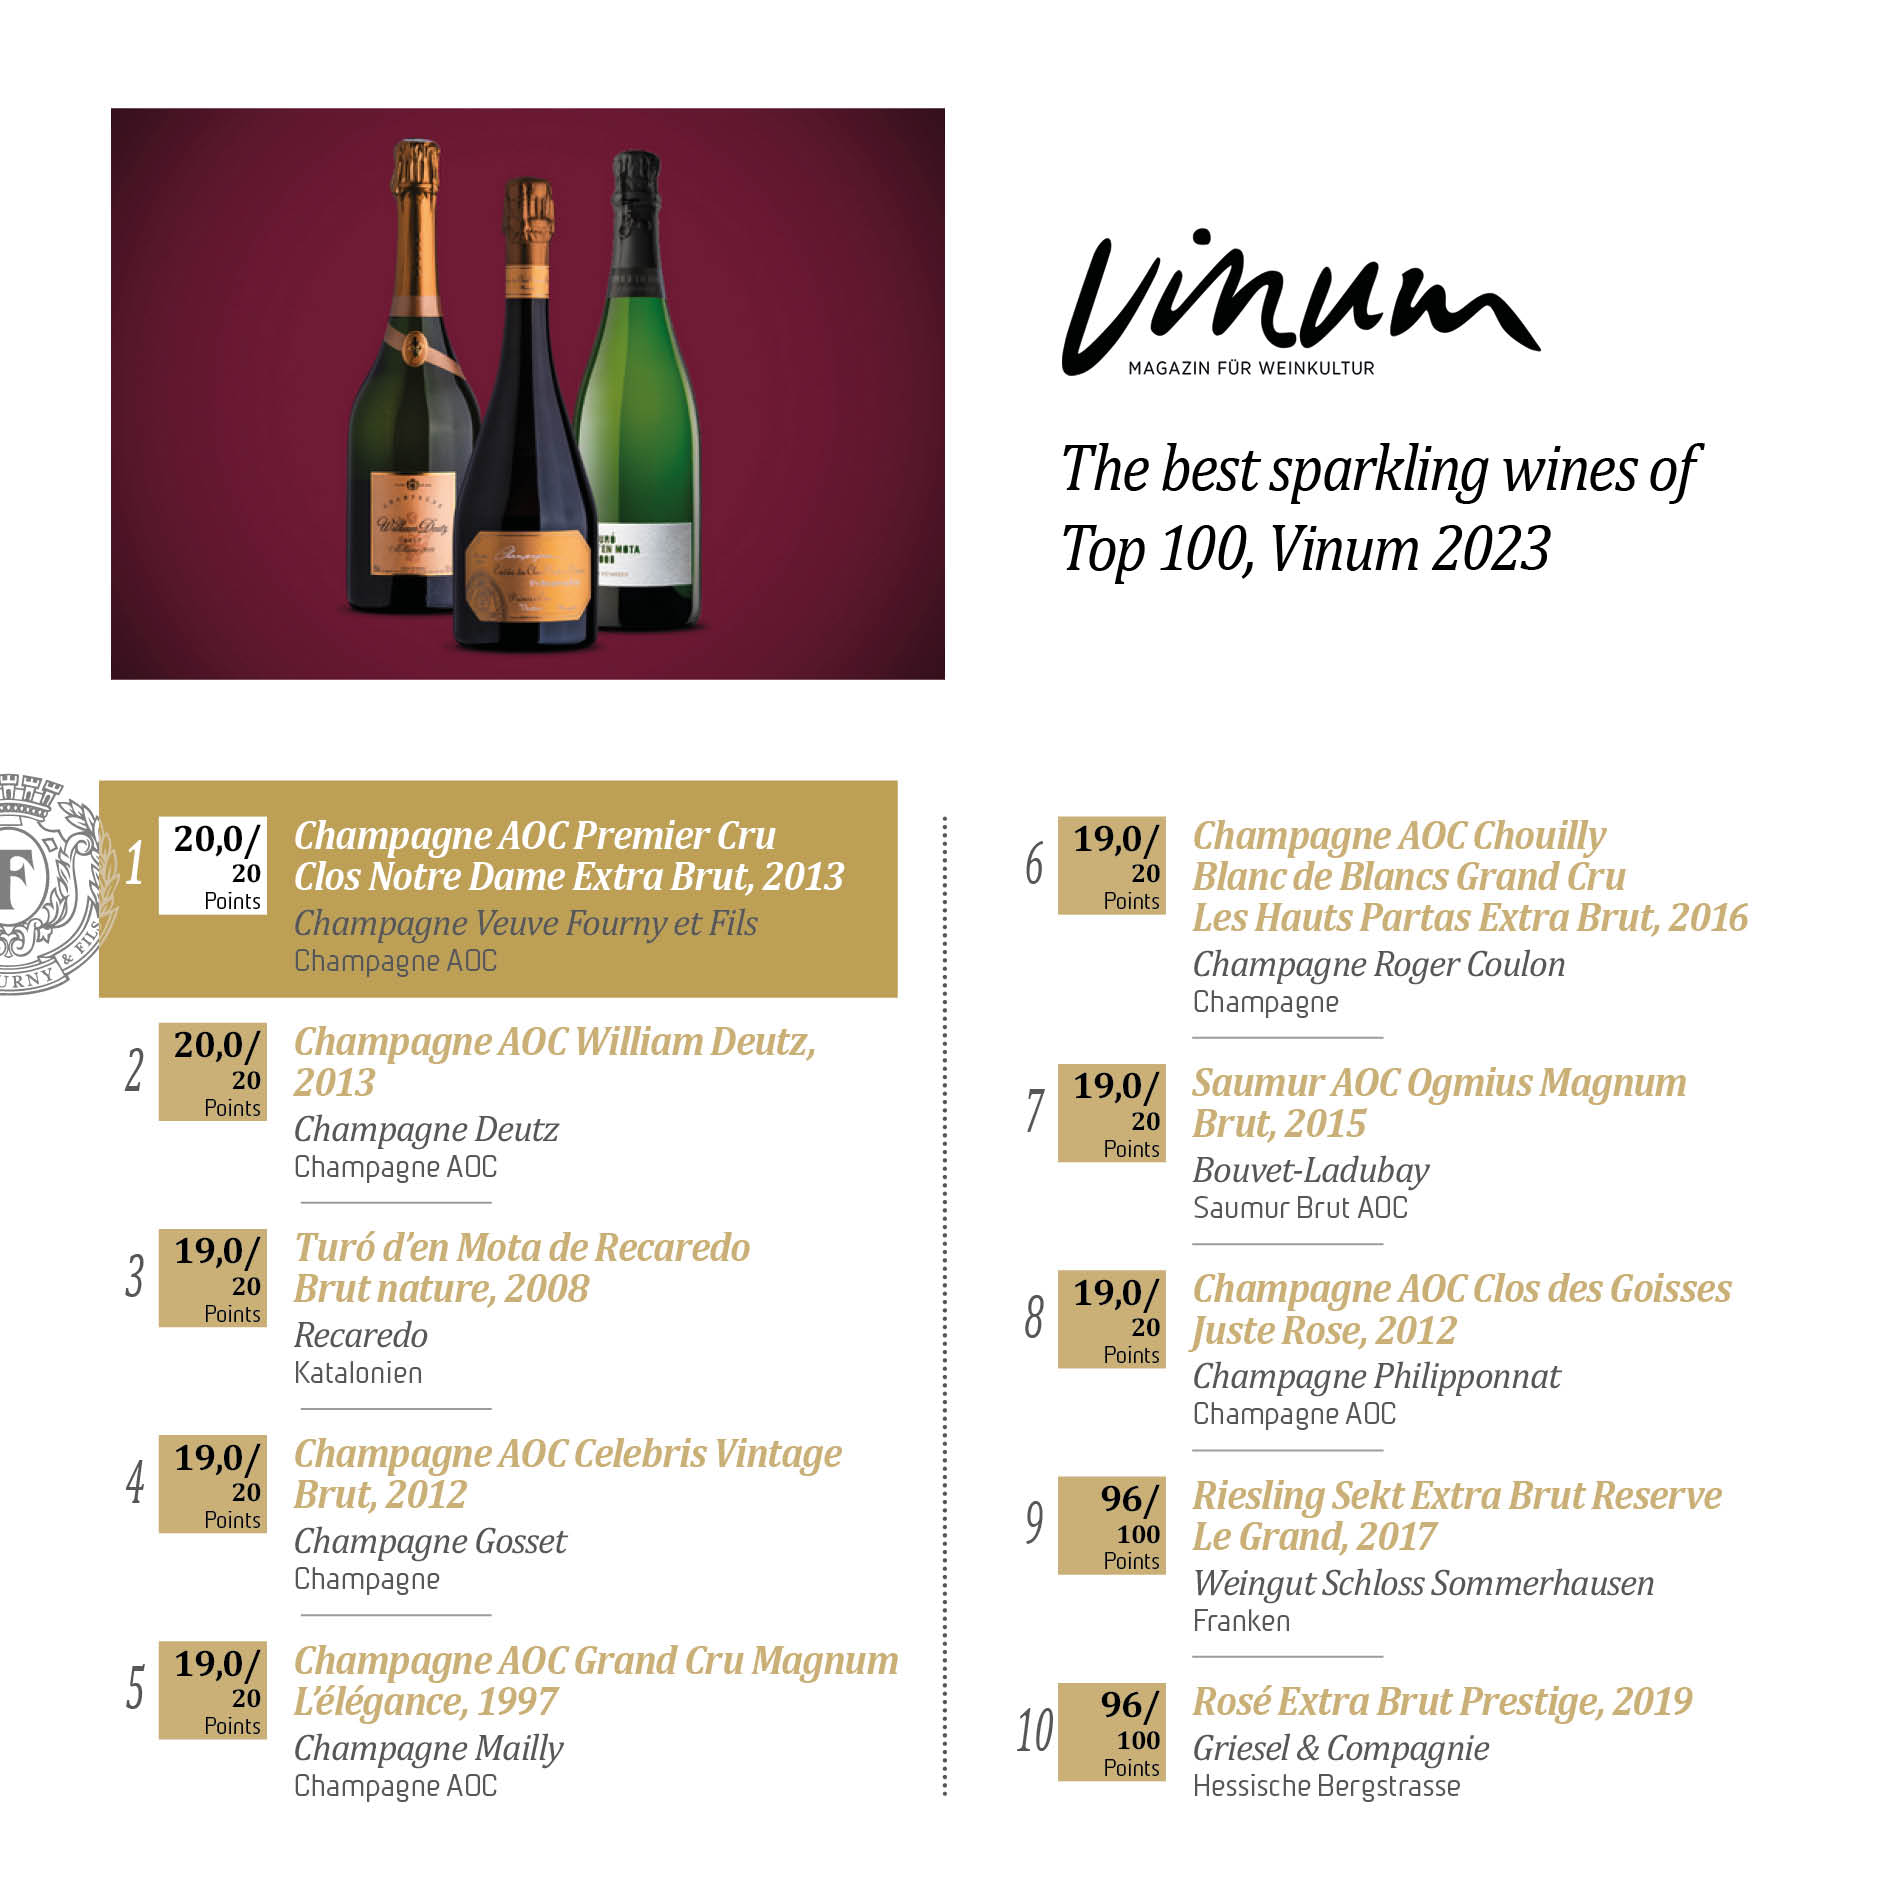 The best sparkling wines of Top 100, Vinum 2023